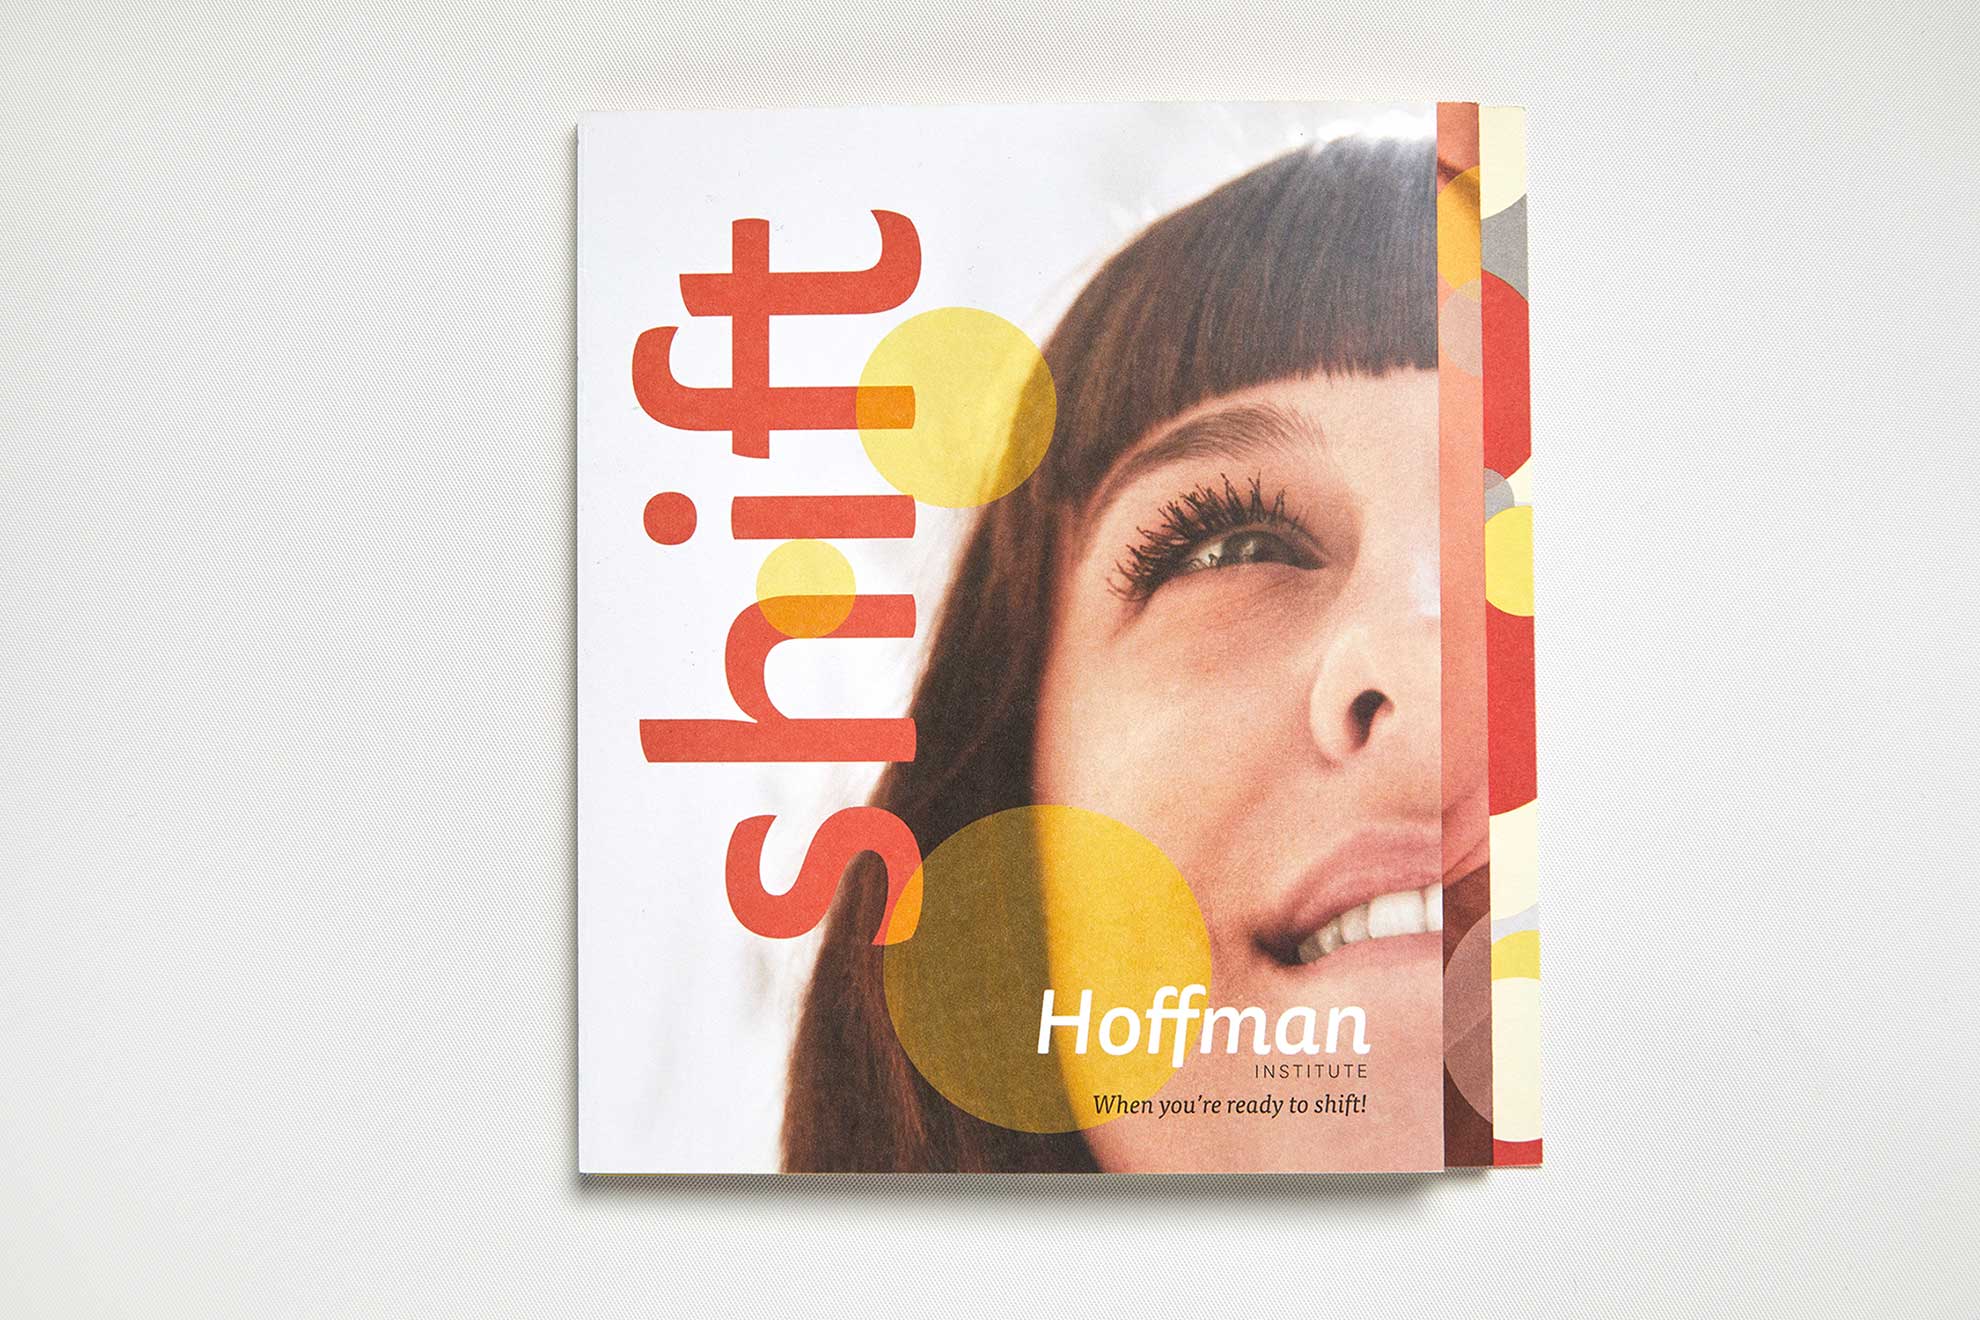 Hoffman Institute - Identity Brand Cover